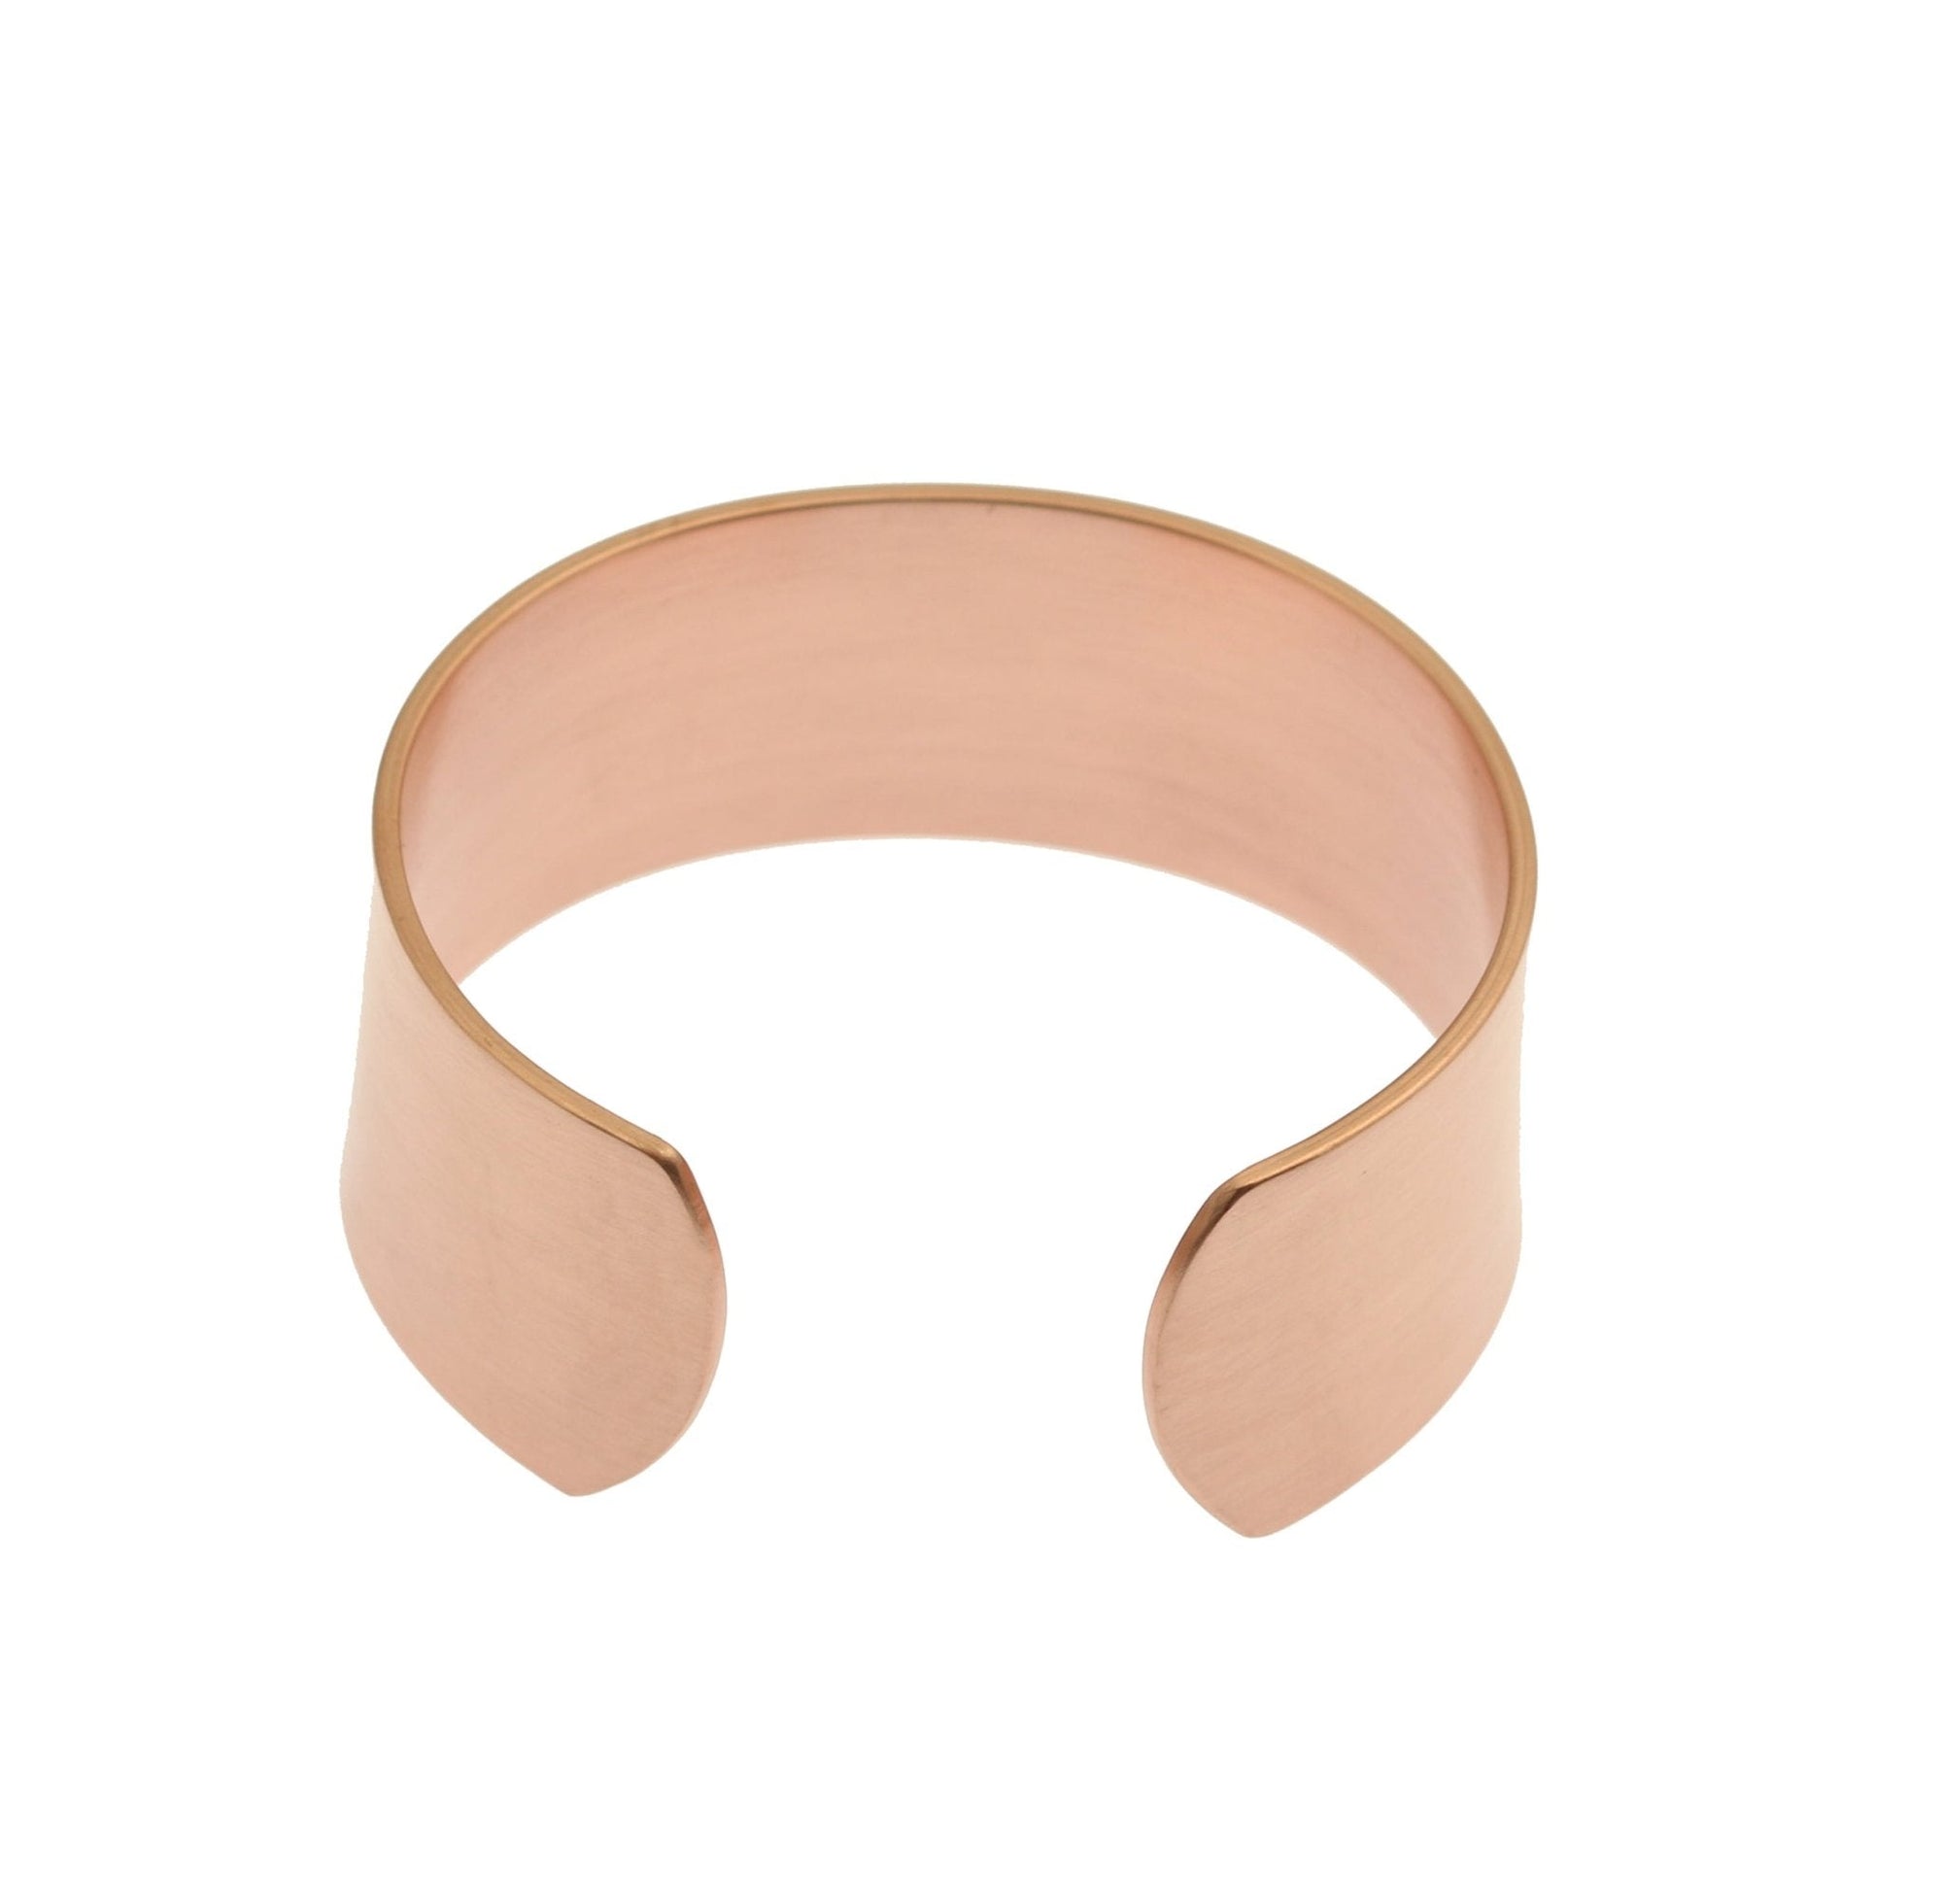 1 Inch Wide Men's Brushed Copper Cuff Bracelet - Opening